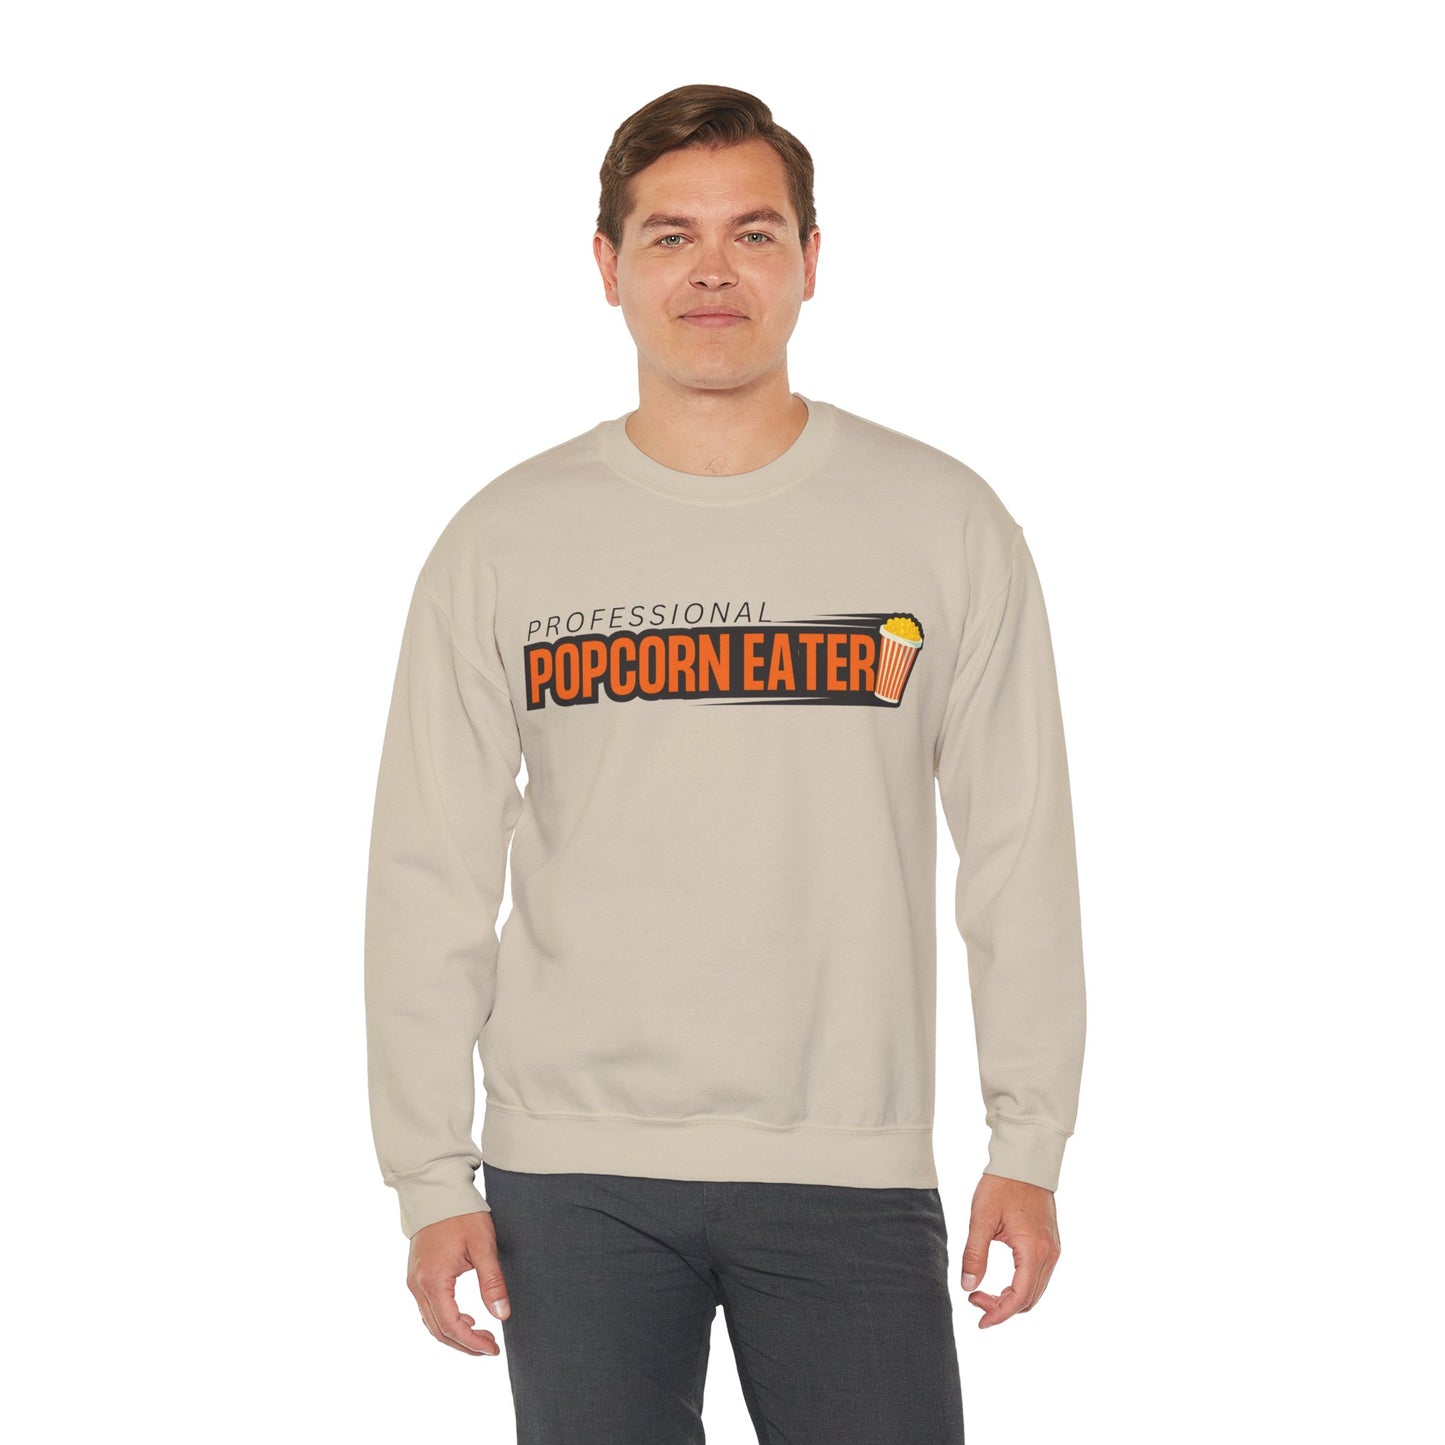 Professional Popcorn eater Sweatshirt